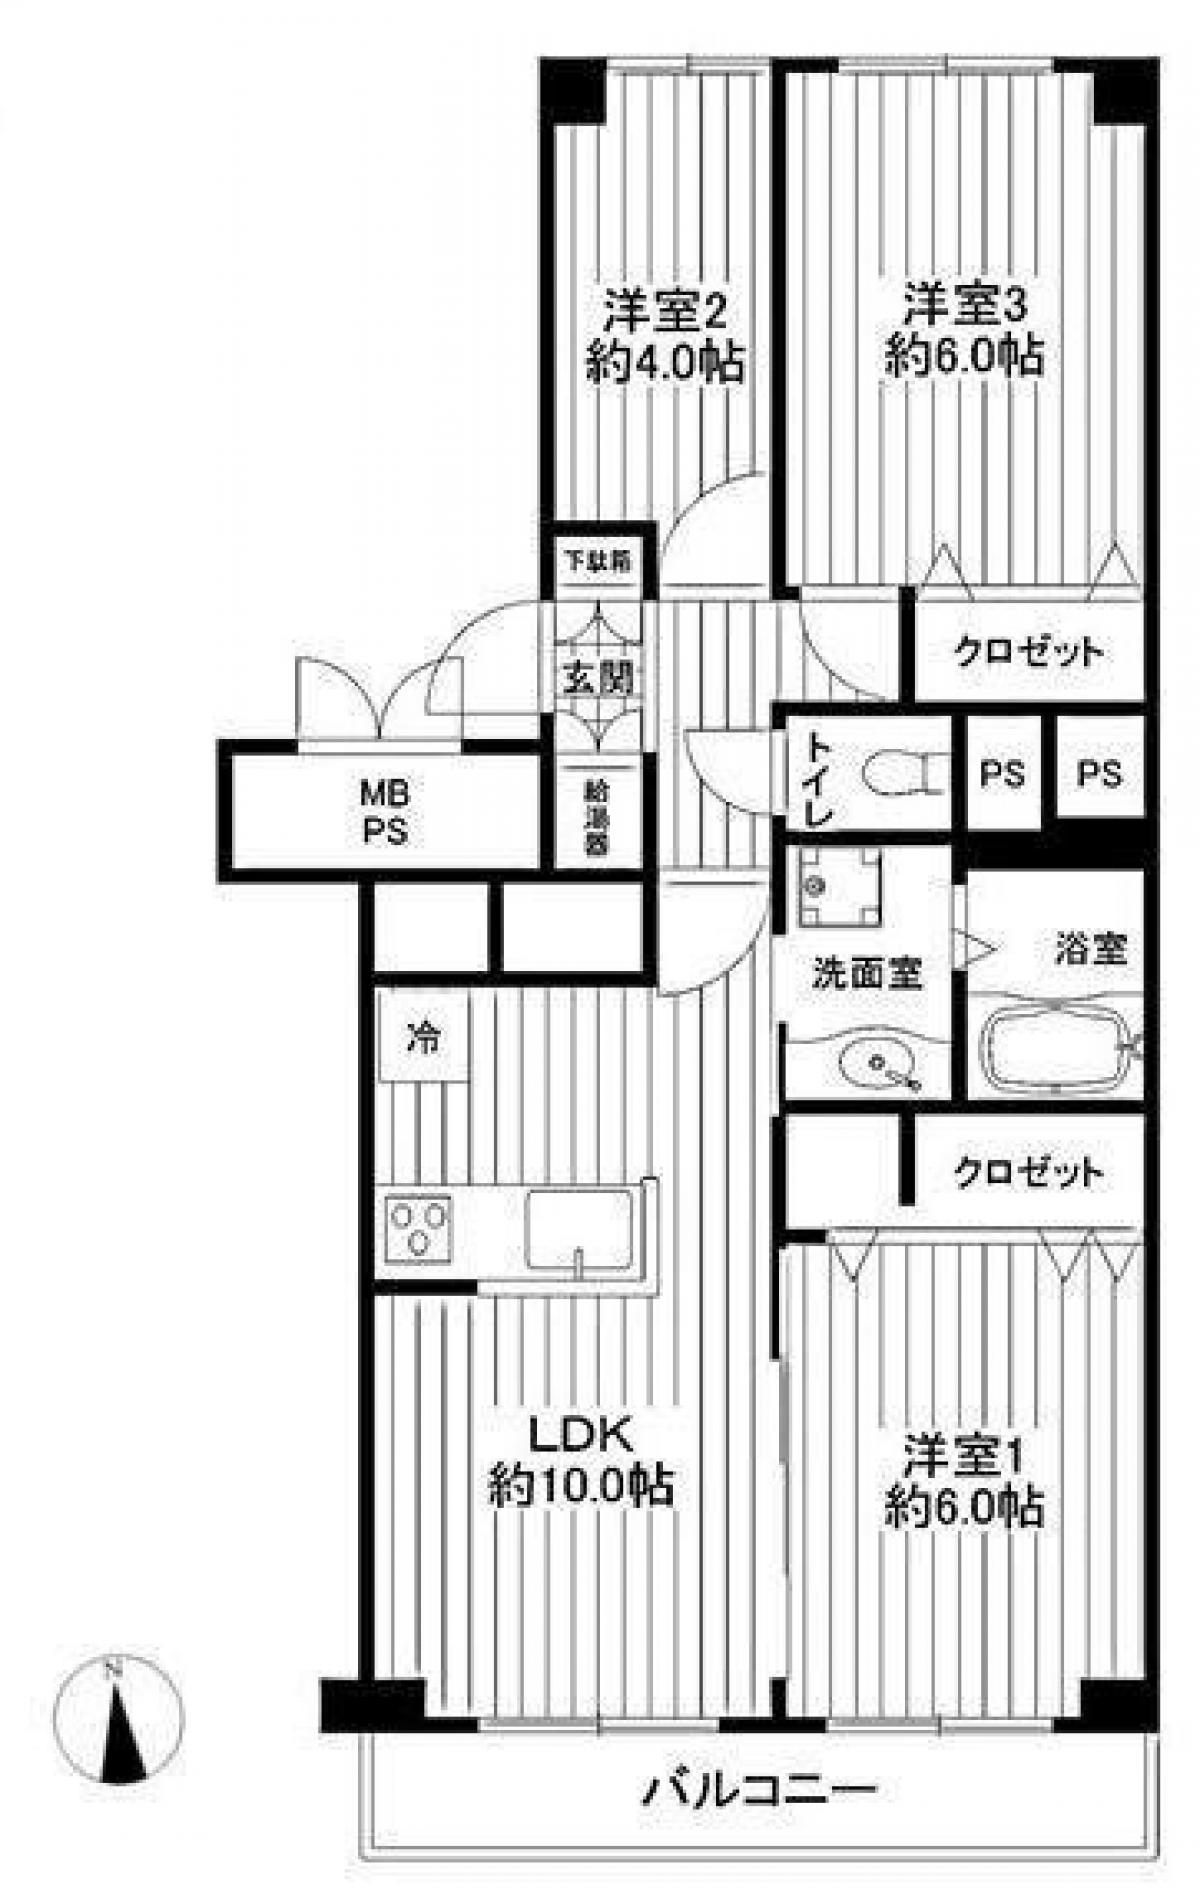 Picture of Apartment For Sale in Odawara Shi, Kanagawa, Japan